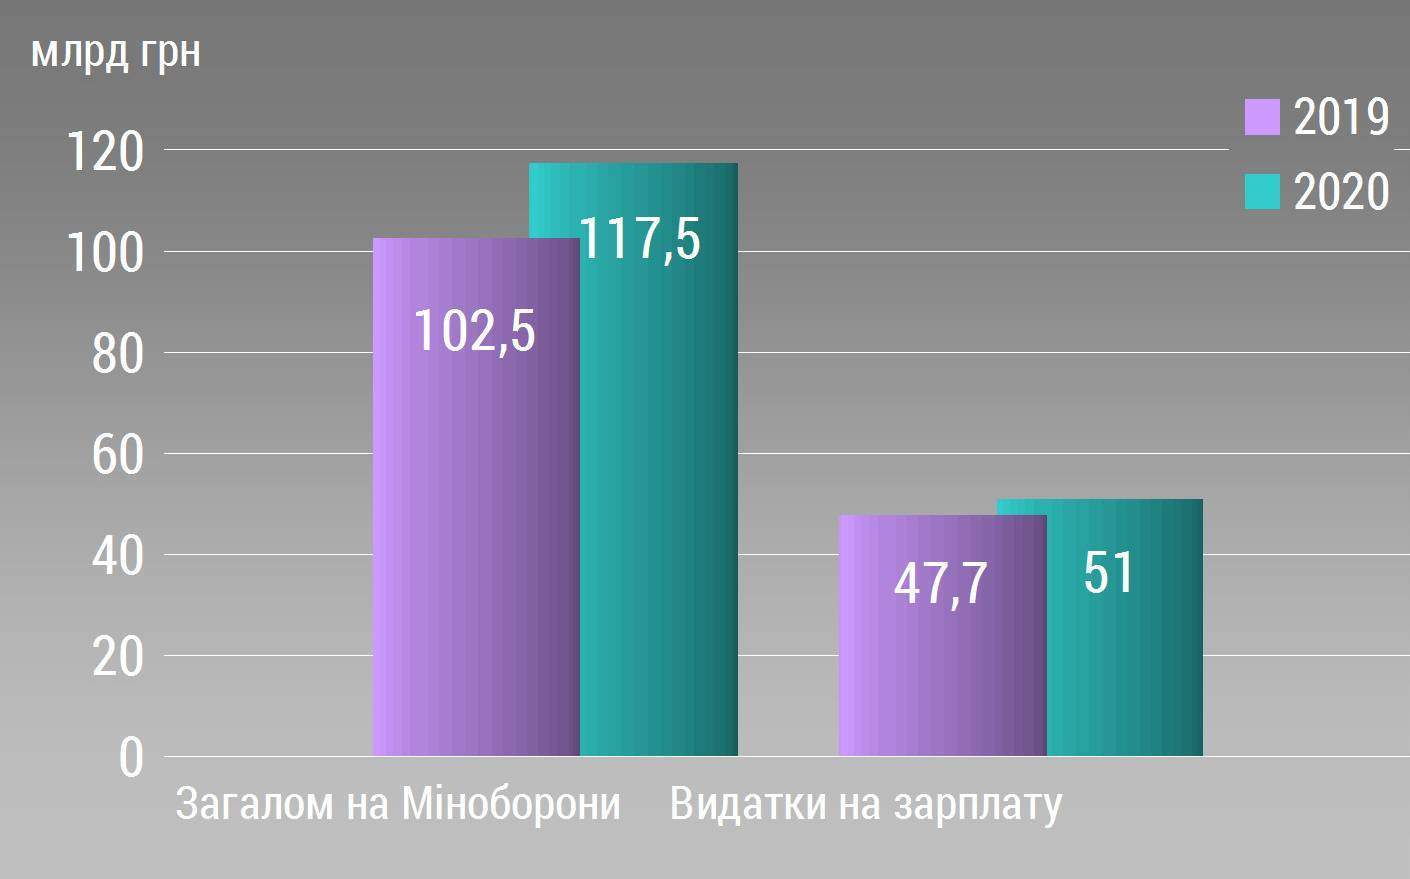 Практическое задание по теме Аналіз показників Державного бюджету України за 2008-2022 роки